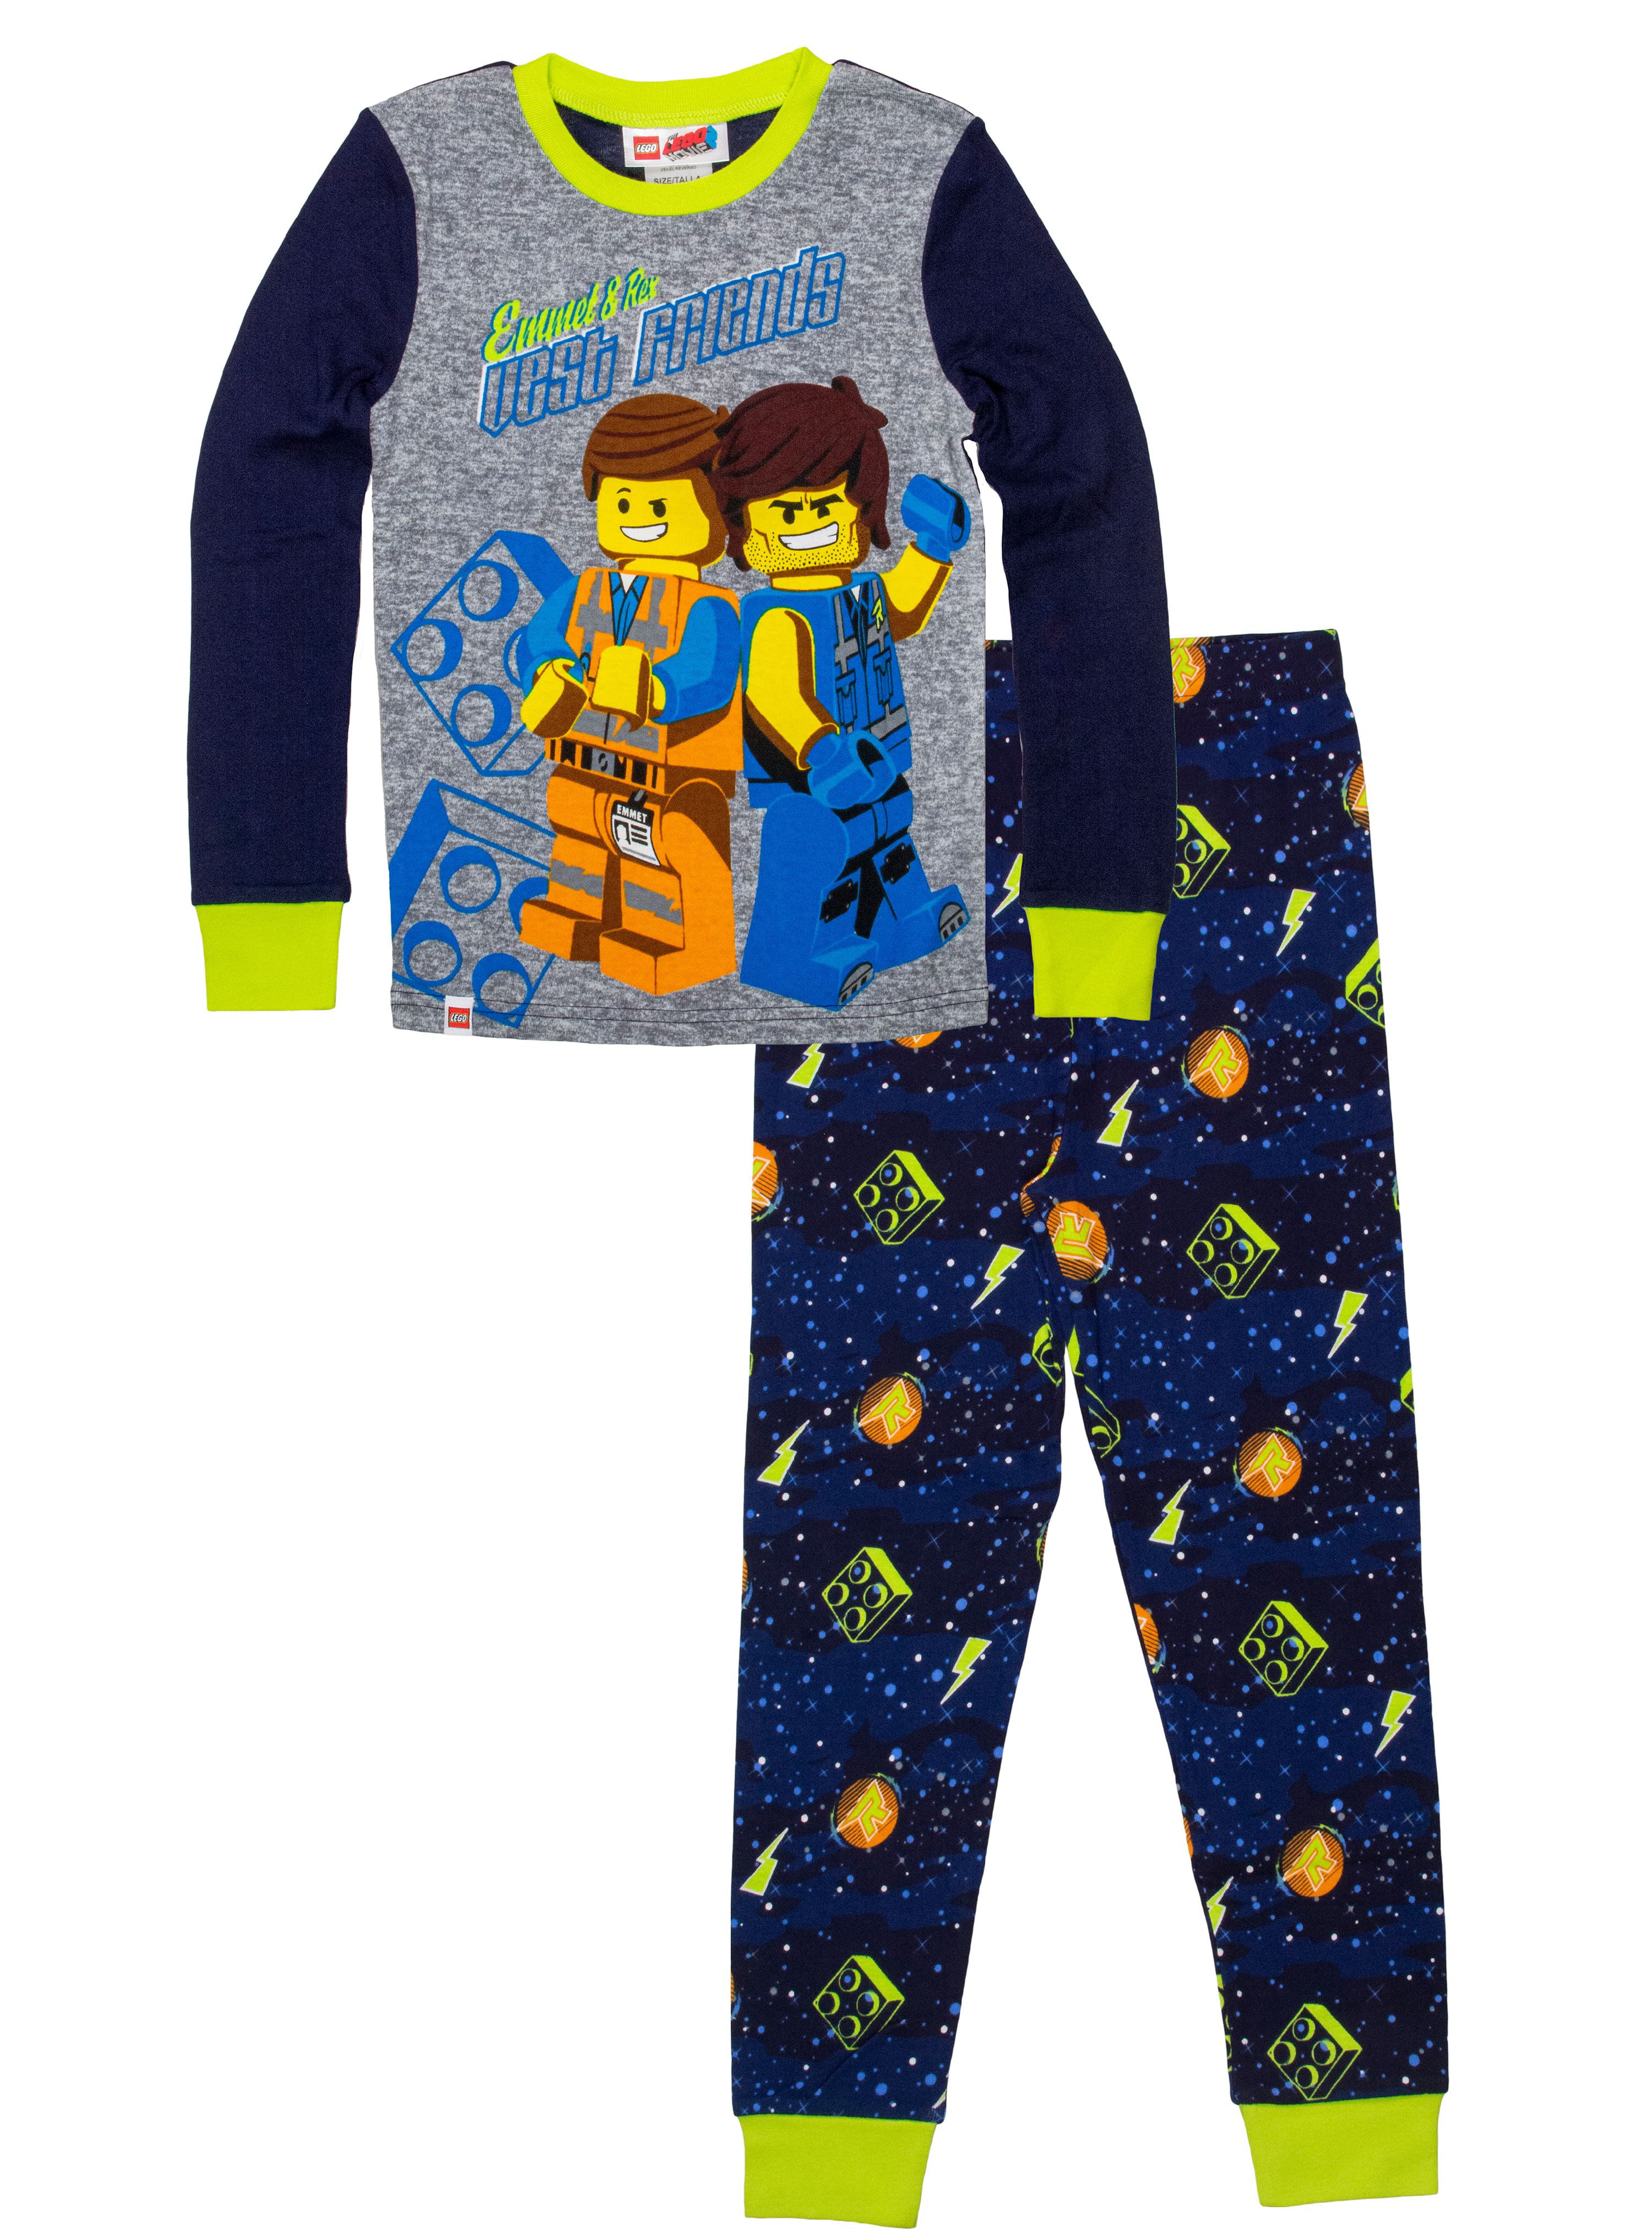 B.U.M Equipment Boys Short Sleeve Pajama Shirt /& Pants Cotton Sleepwear 2PC Set